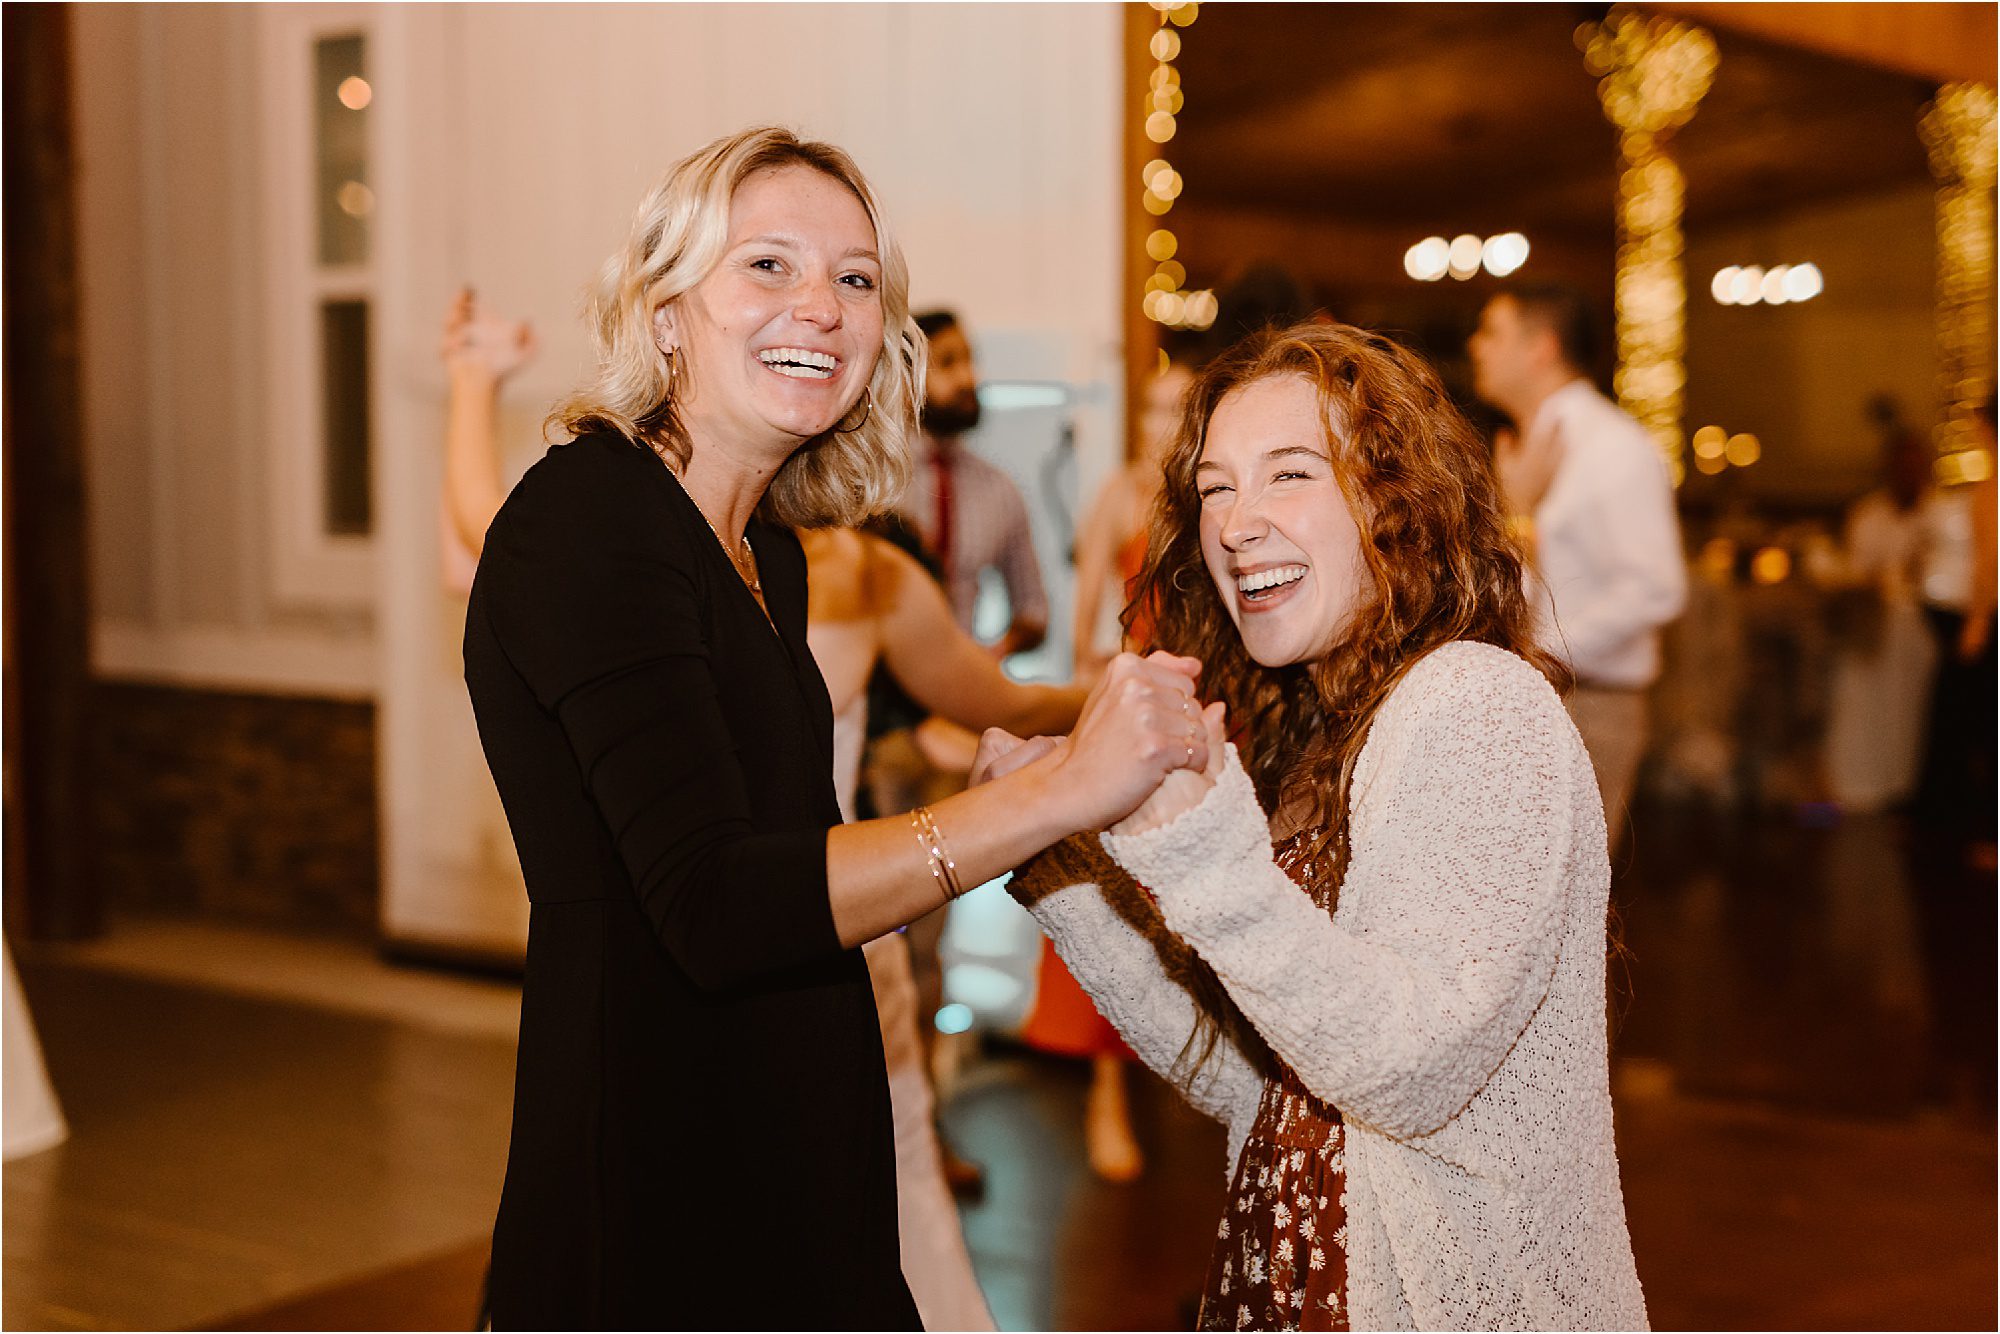 guests enjoying dance floor at wedding reception